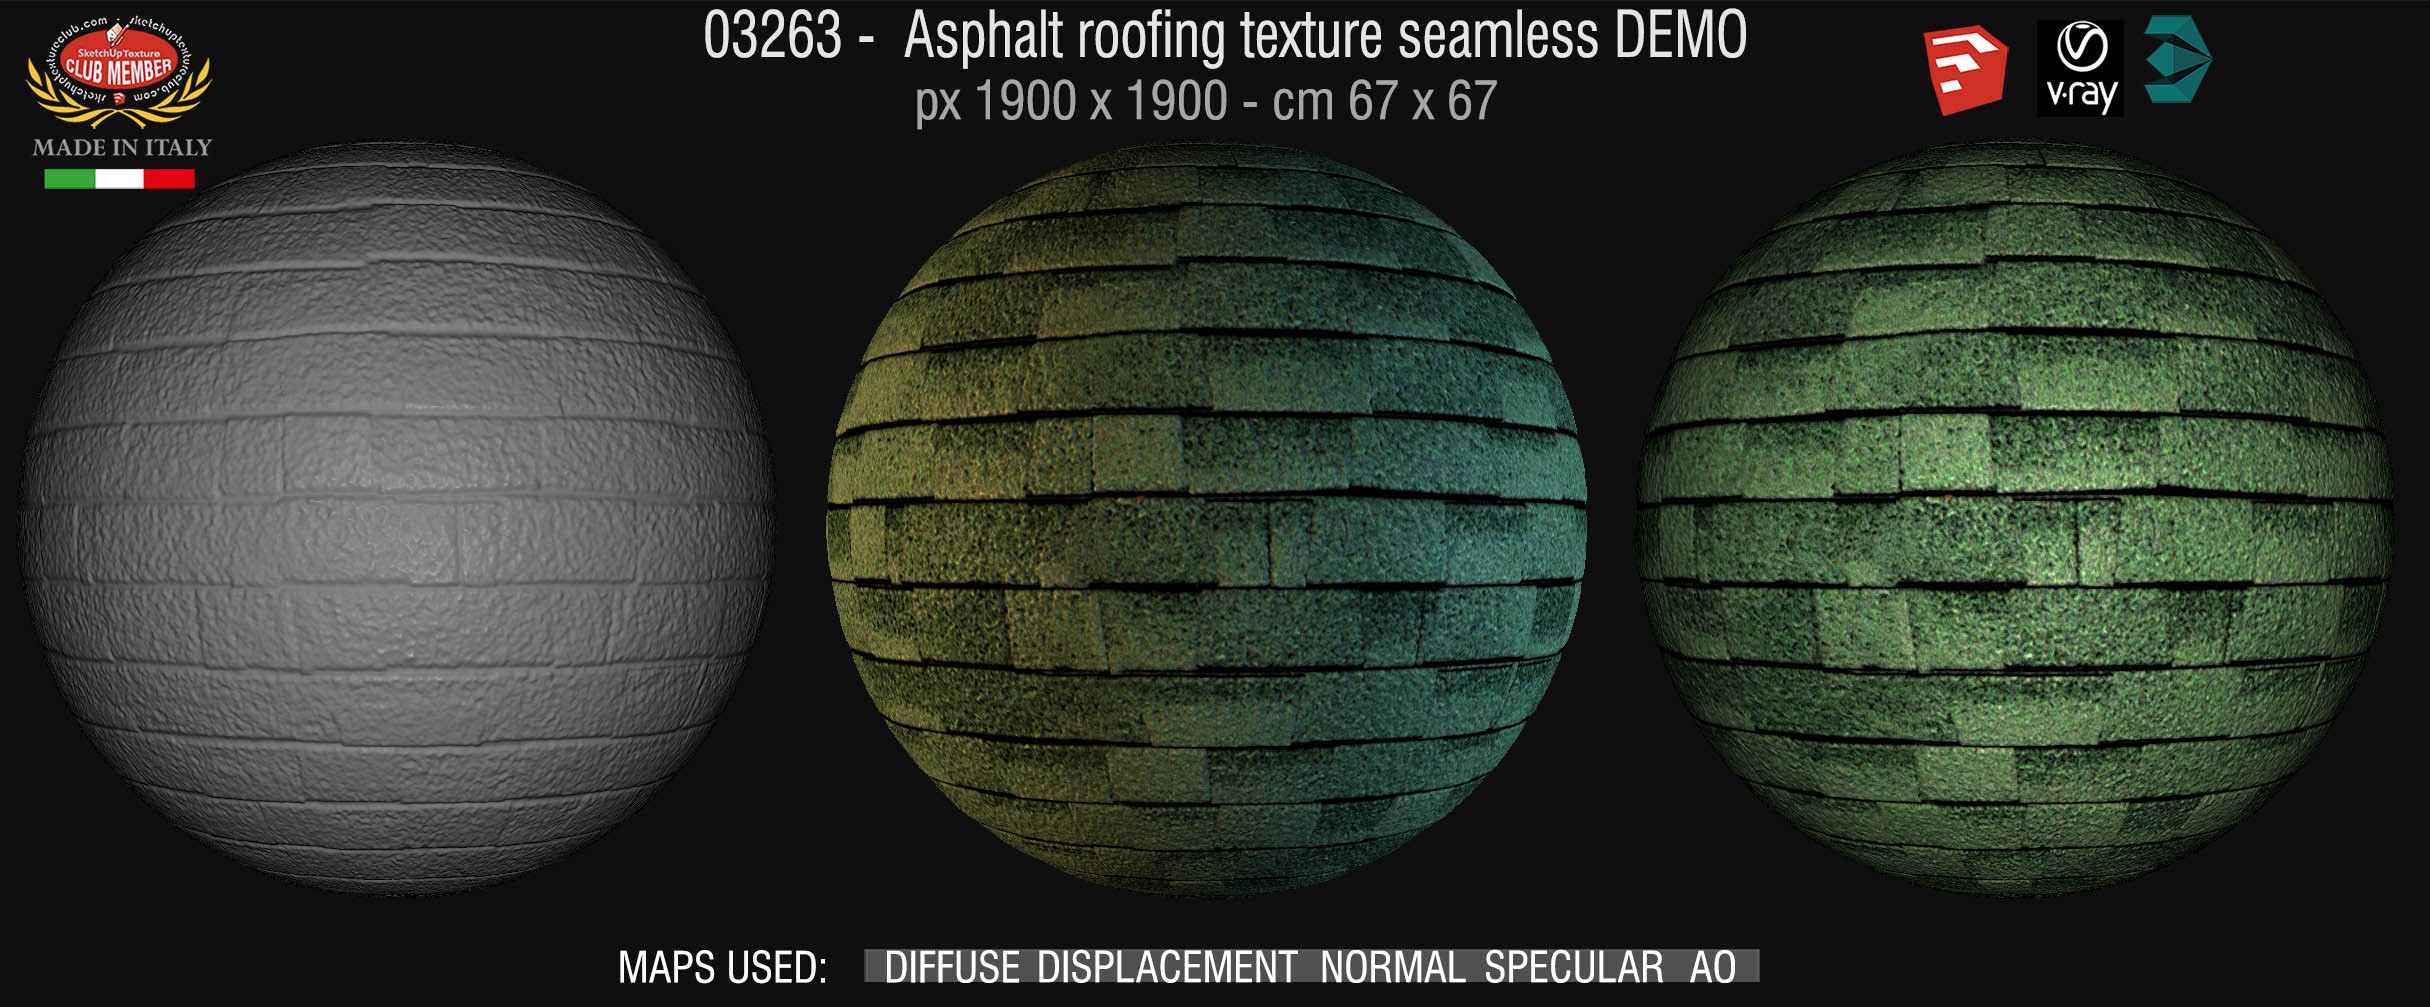 03263 Asphalt roofing texture seamless + maps DEMO